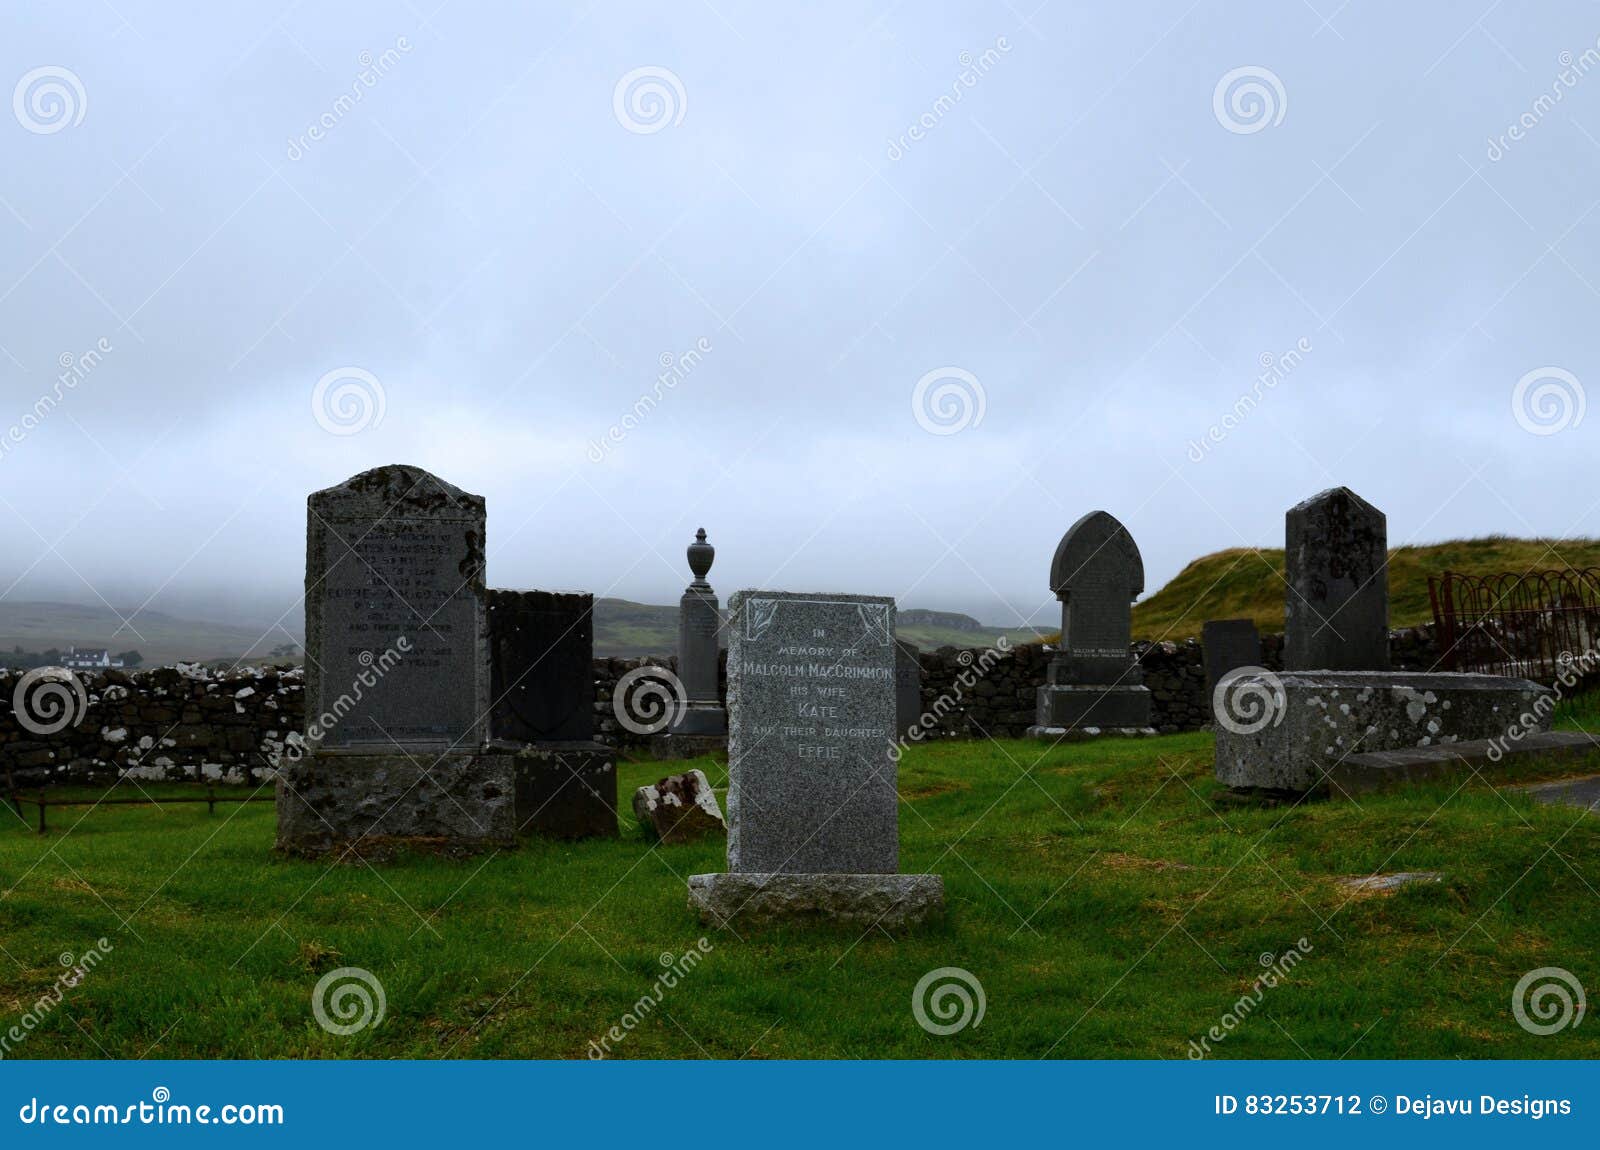 Dunvegan Memorial Burial Ground in Scotland Editorial Photography ...